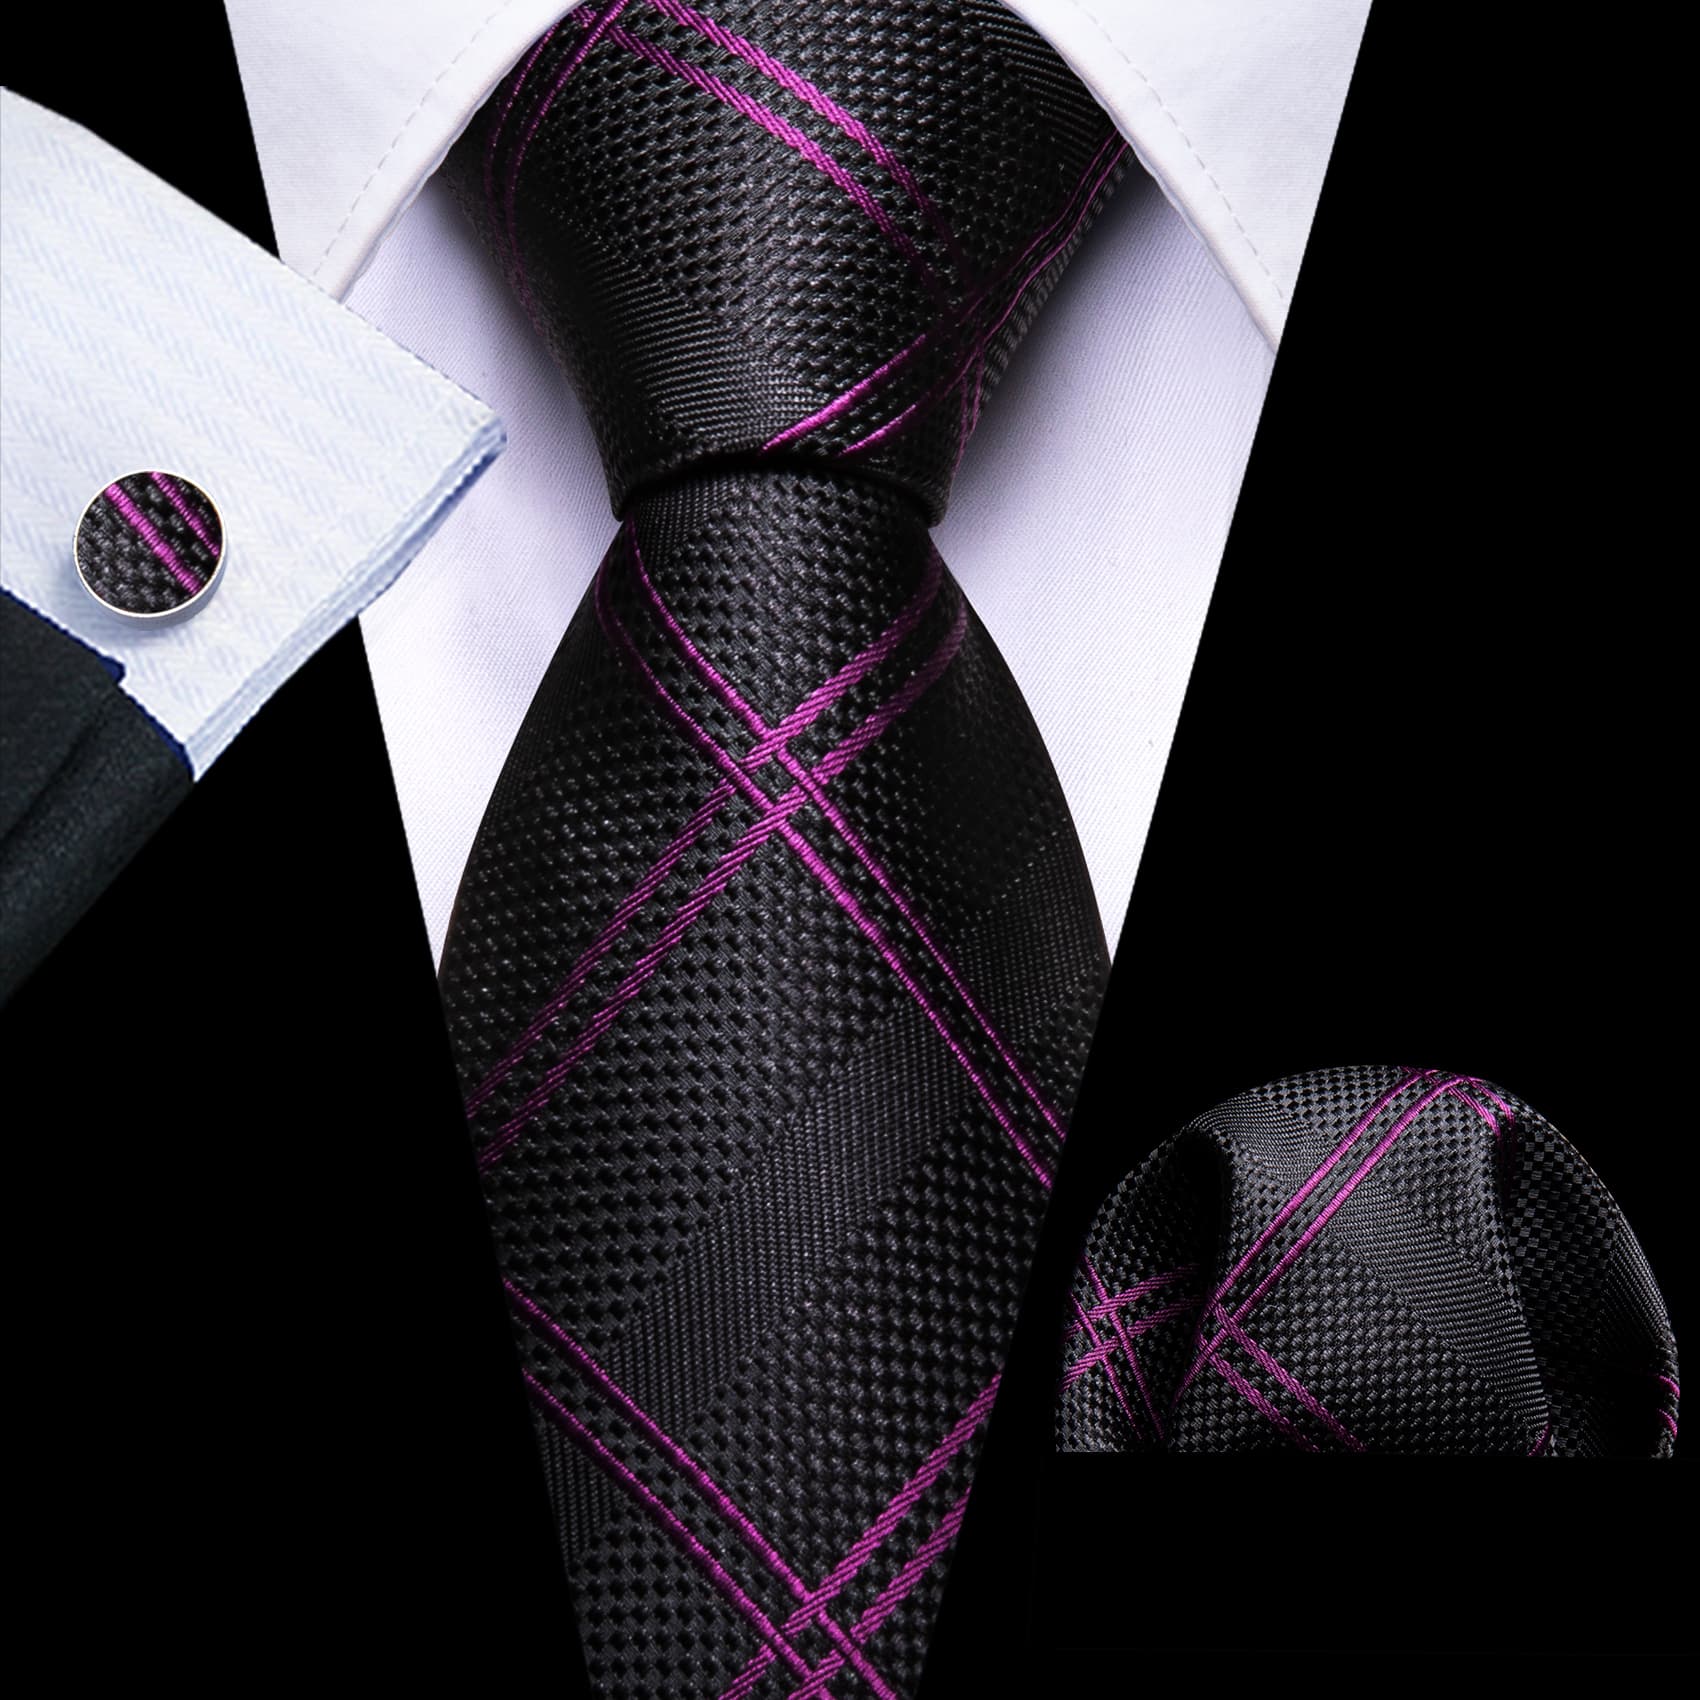 bLack tie and purple stripes purple tie blue shirt 